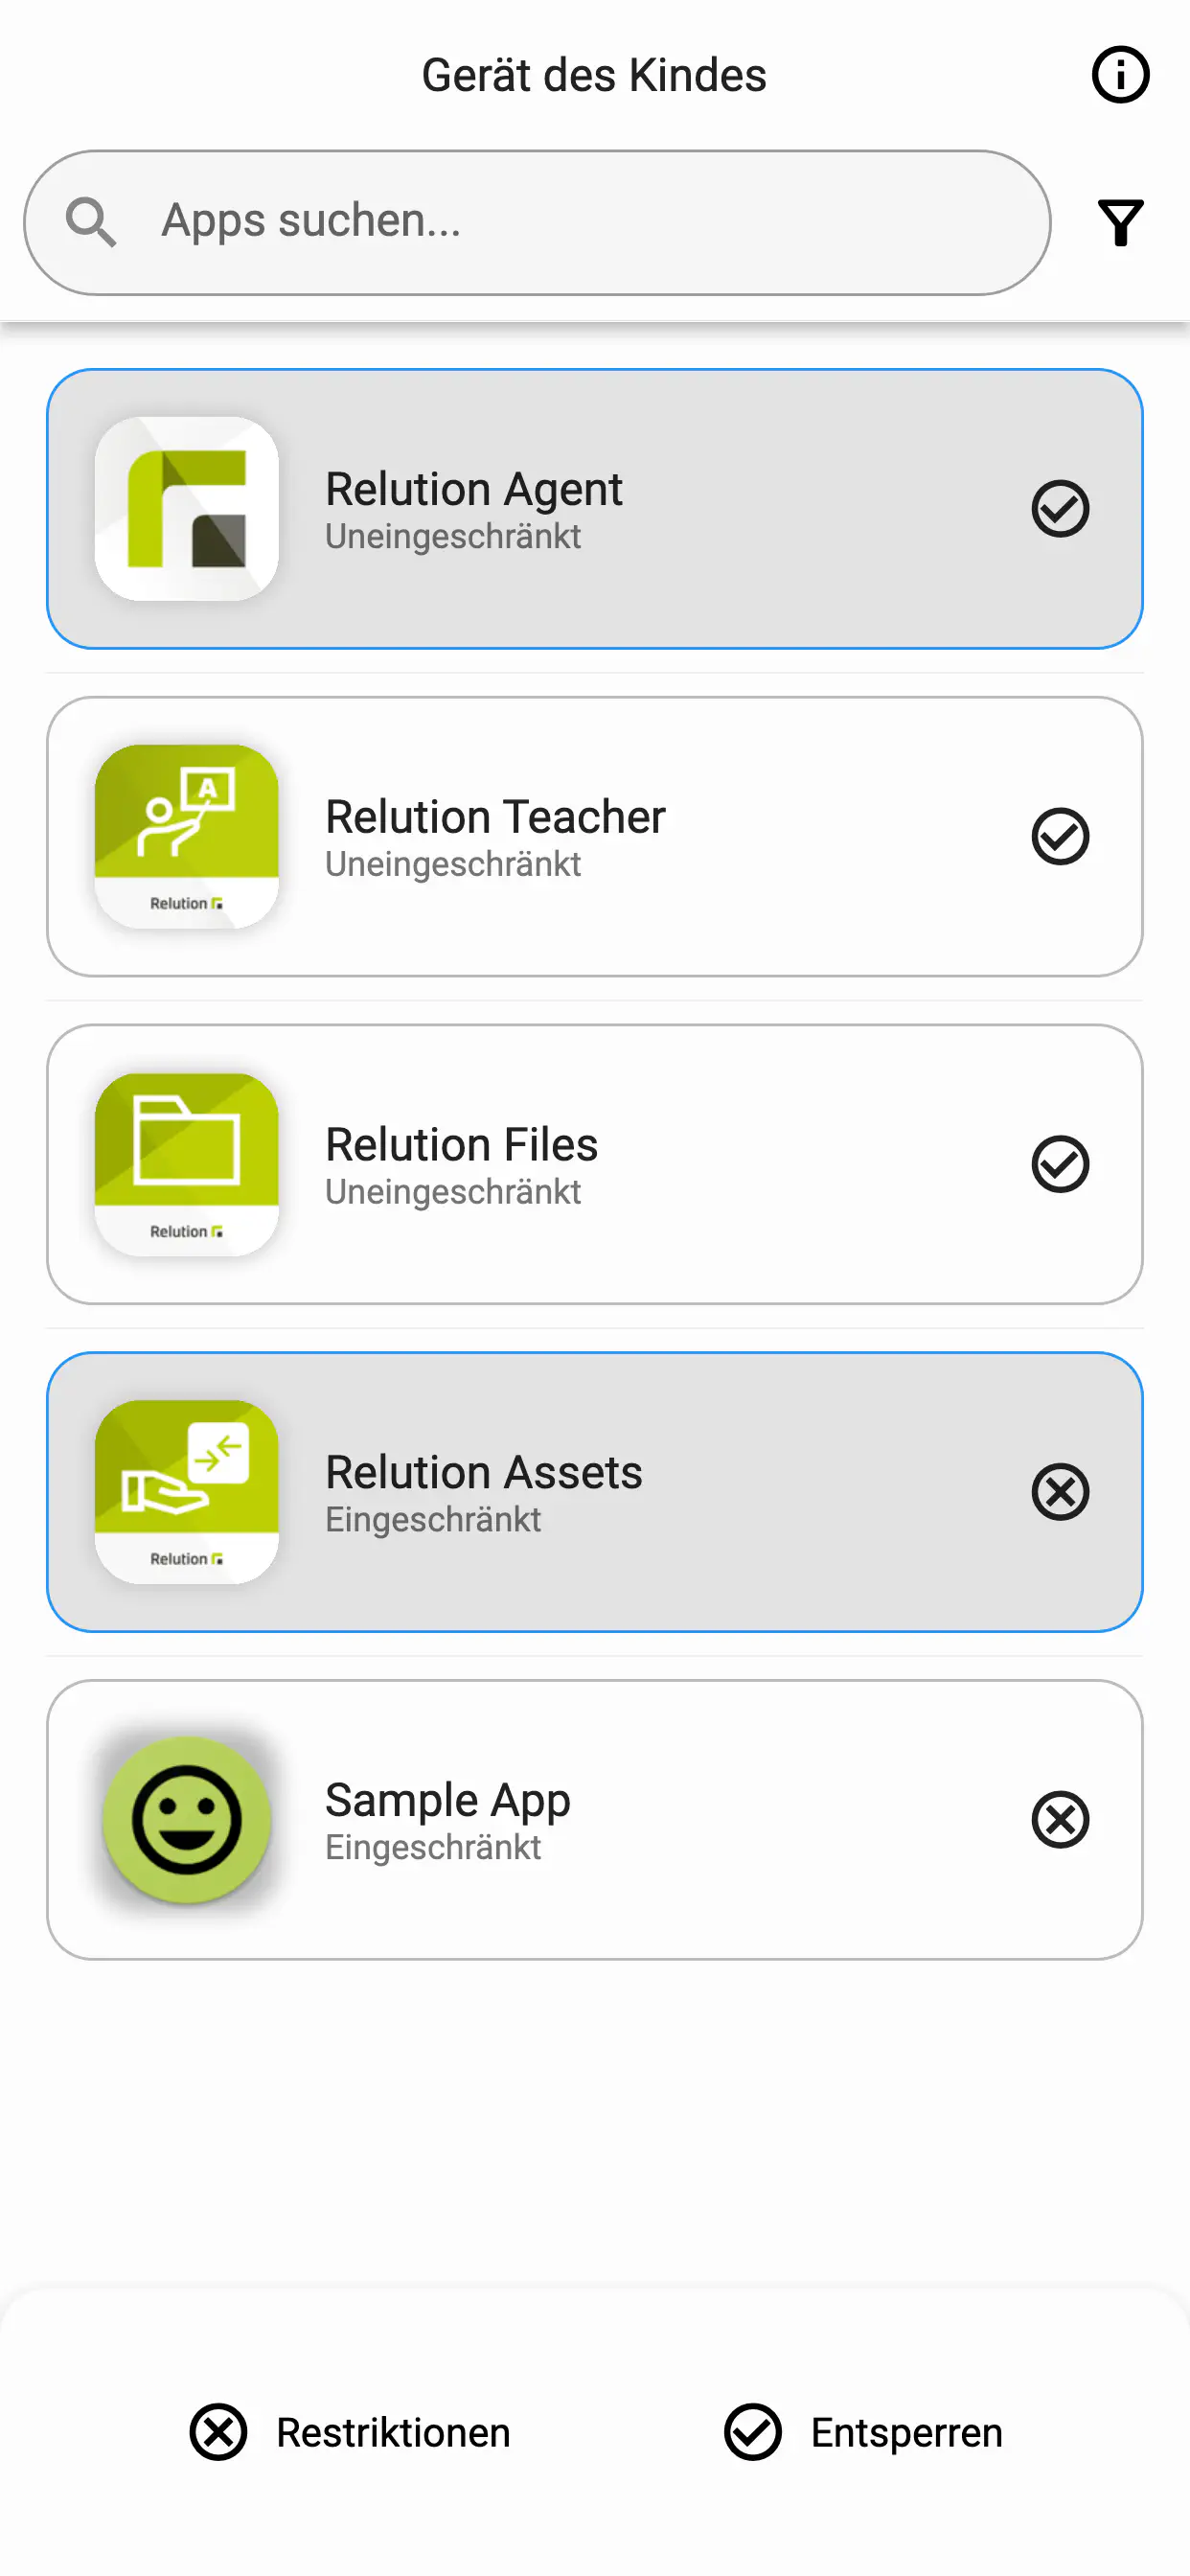 Relution Parent App - Apps blockieren/freigeben